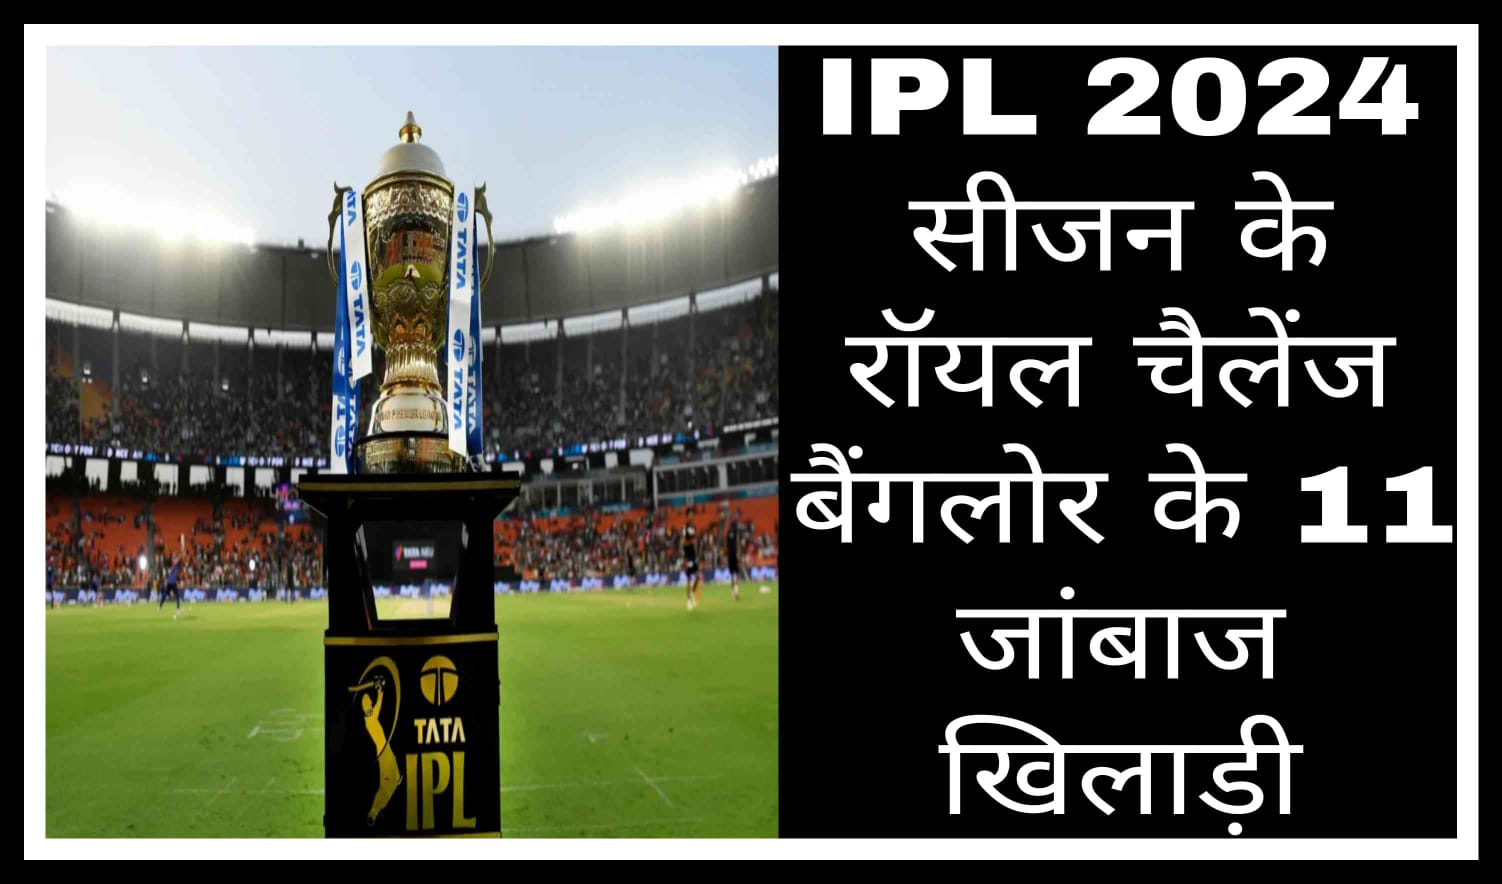 11 brave players of Royal Challenge Bangalore of IPL 2024 season